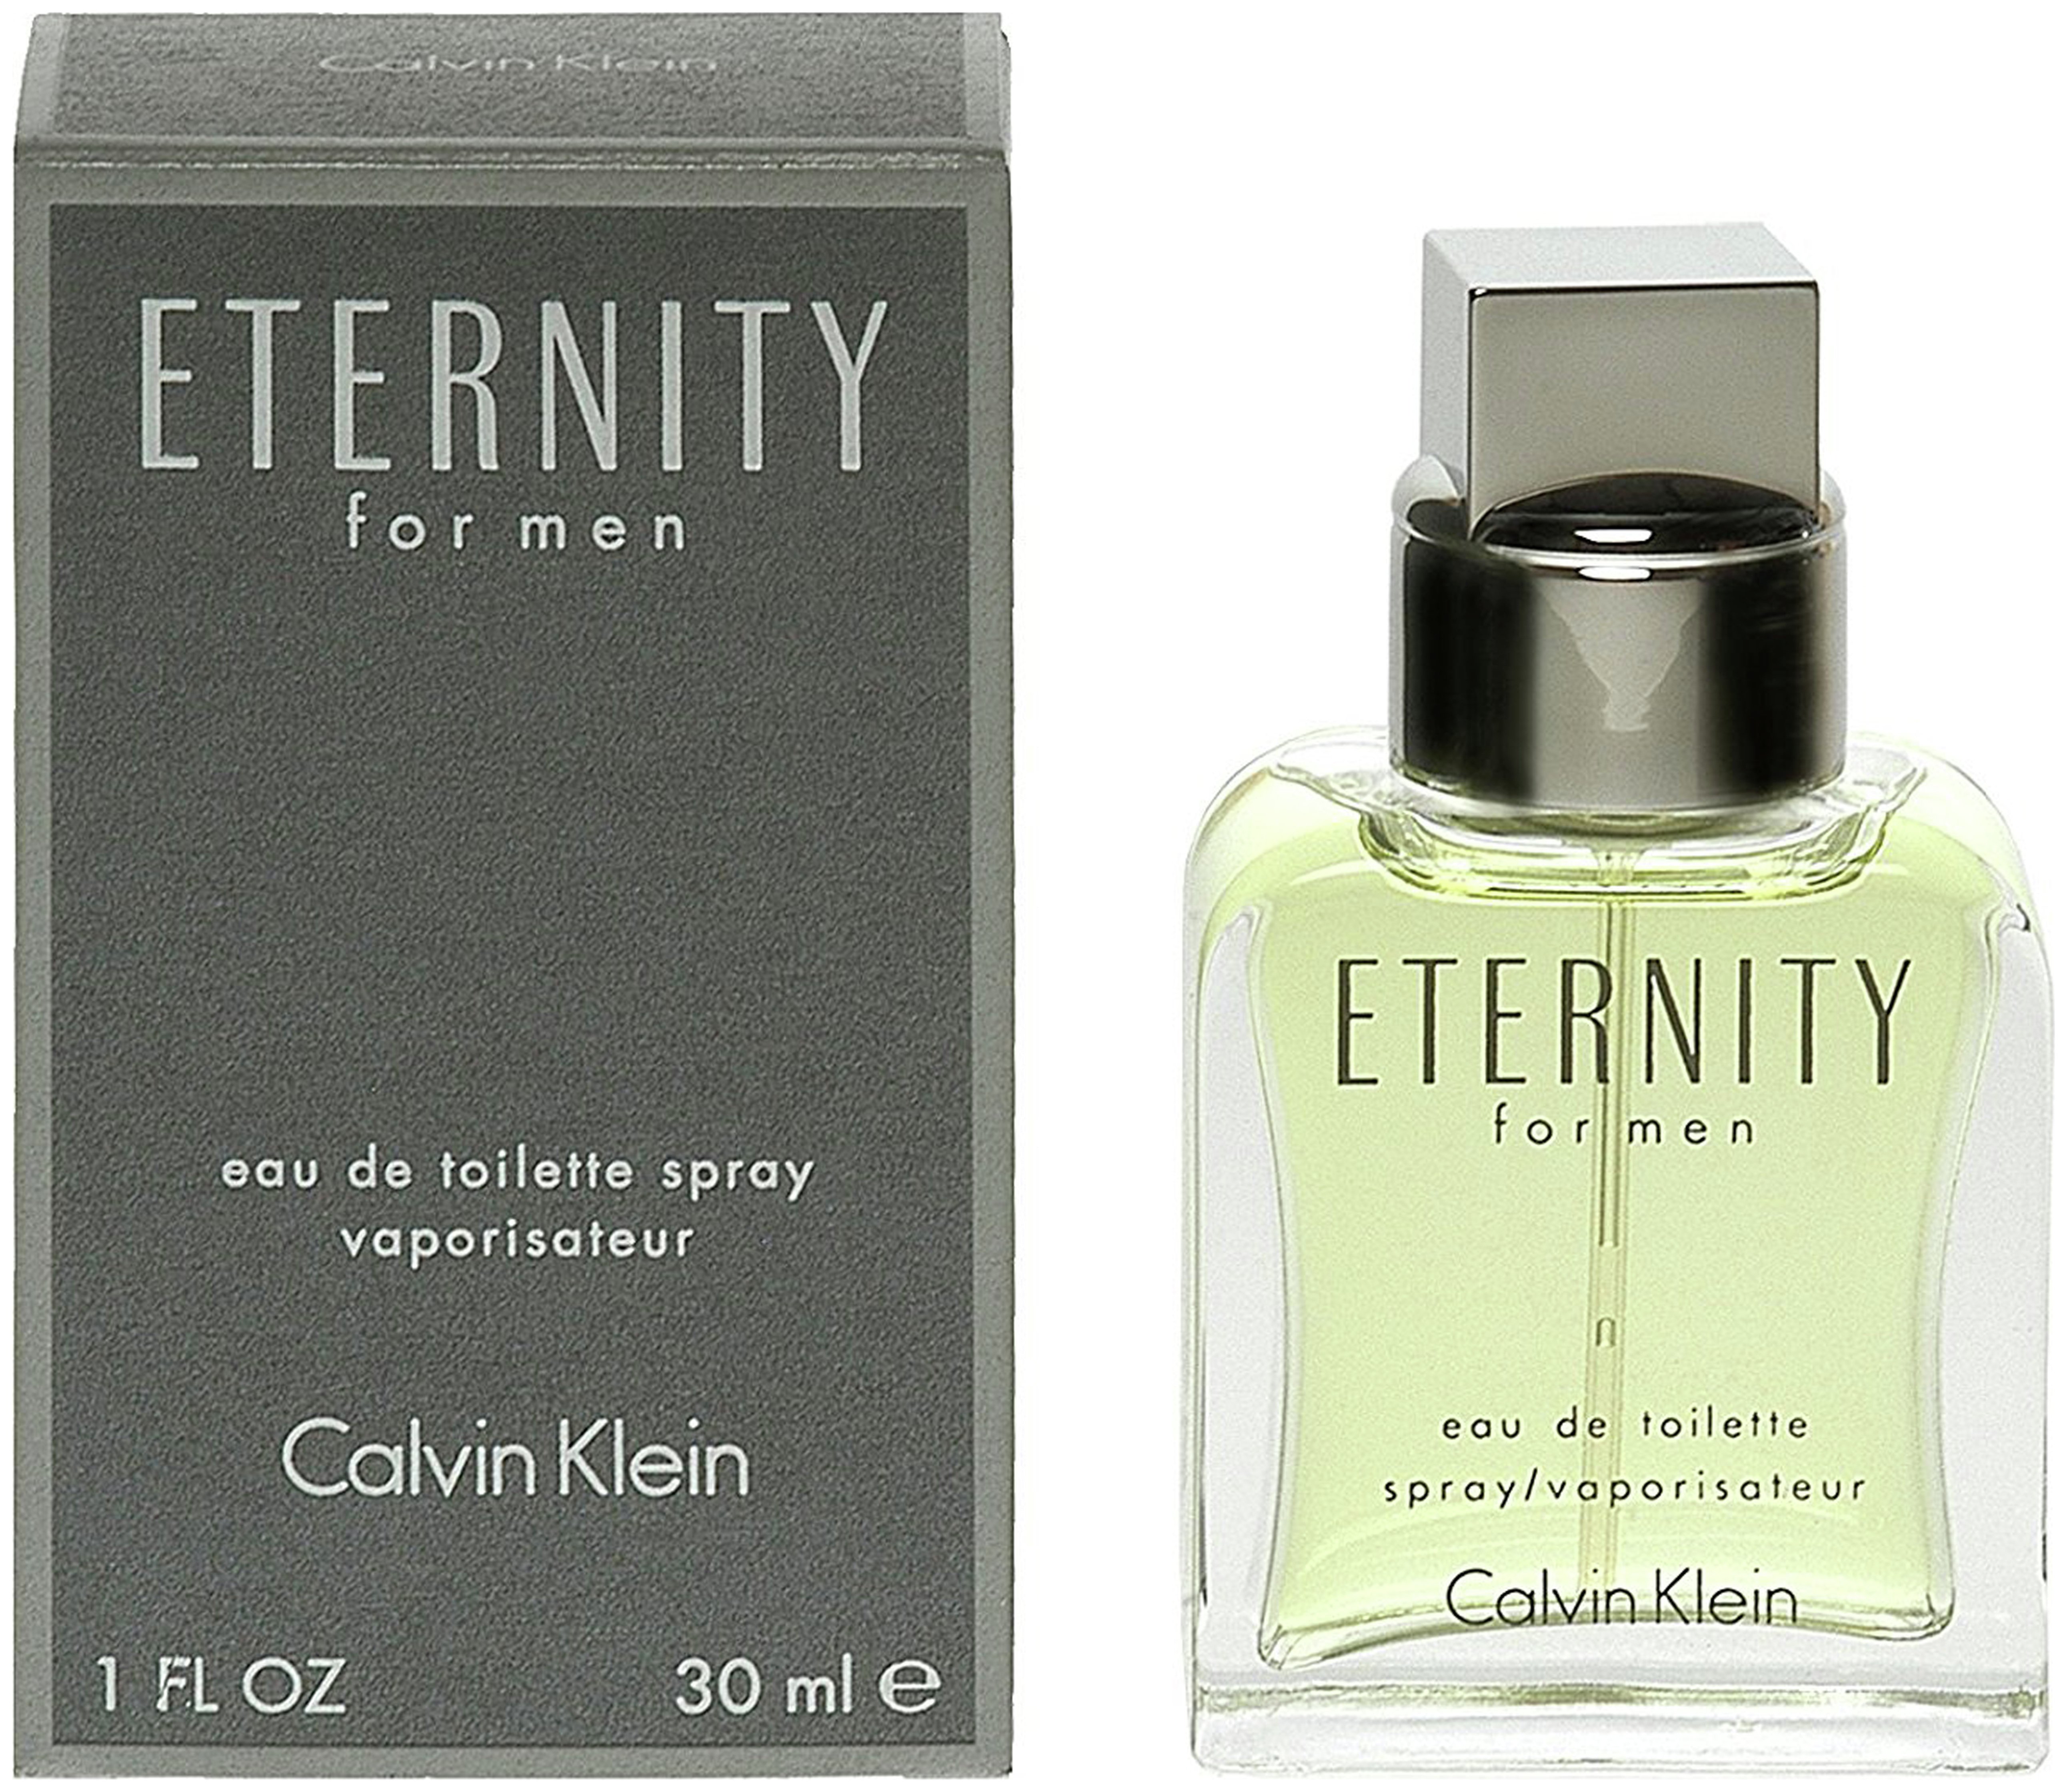 Calvin Klein Eternity Eau de Toilette for Men - 30ml